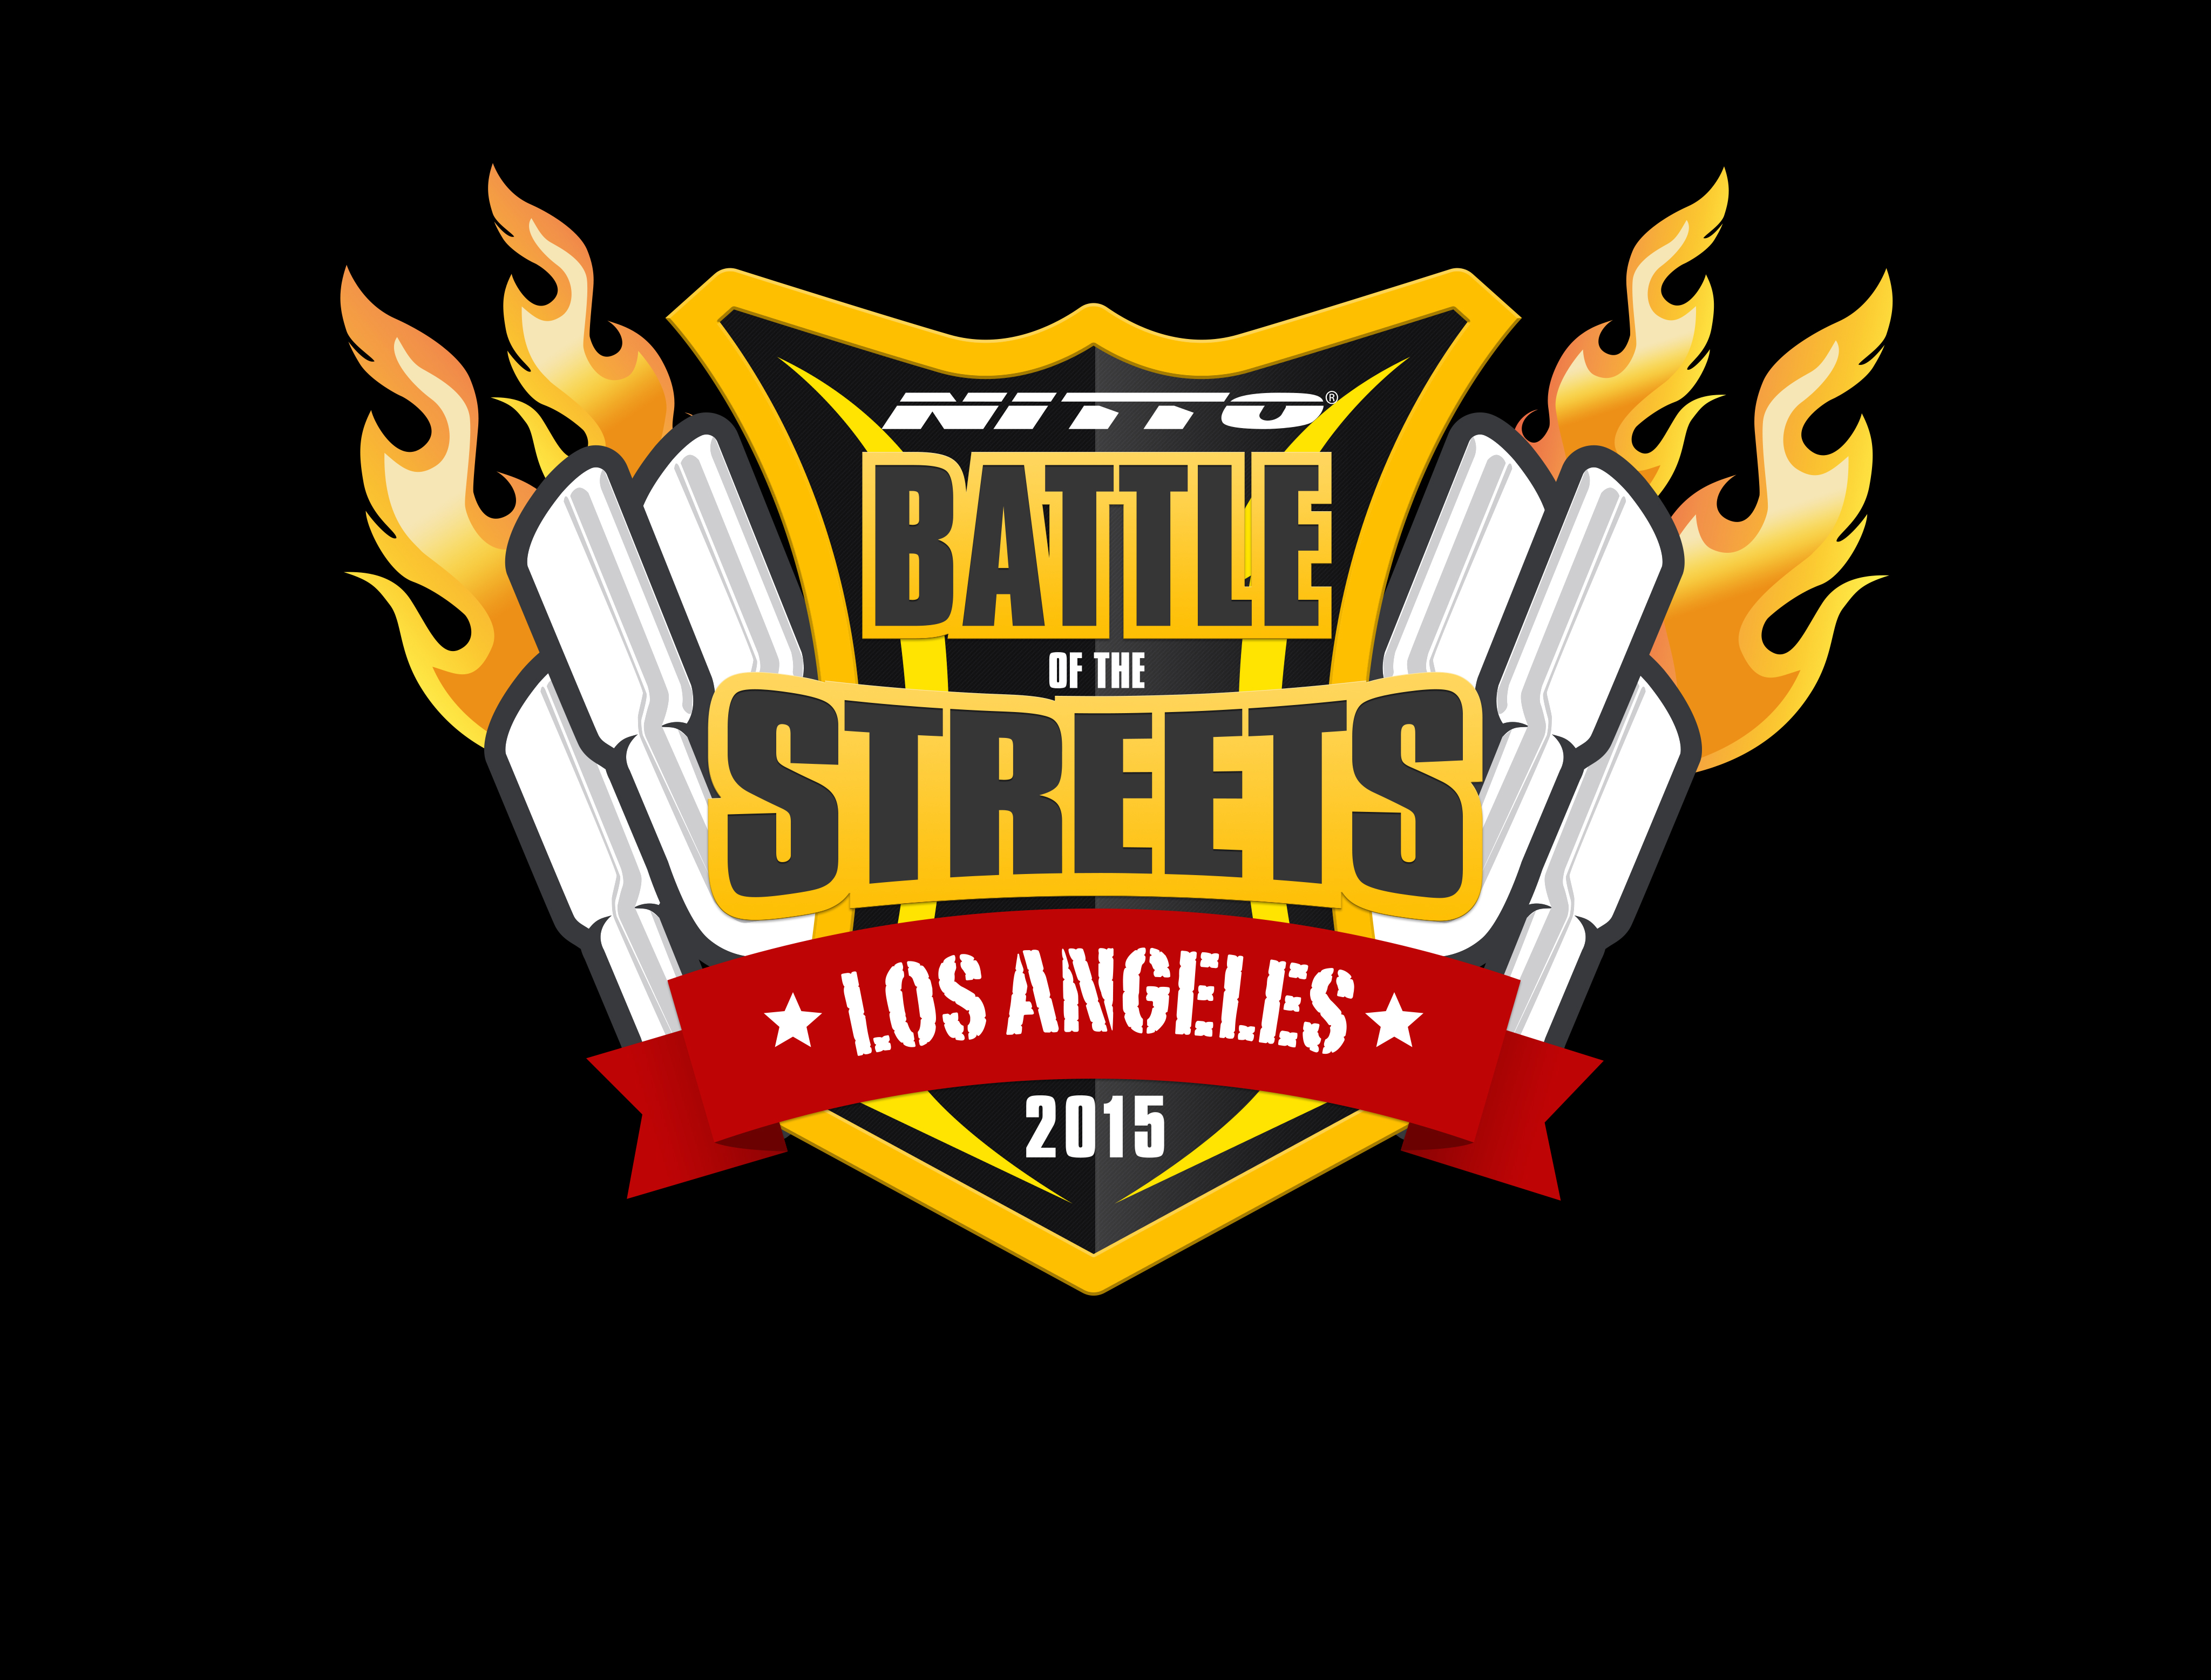 BattleOfTheStreetsLogo